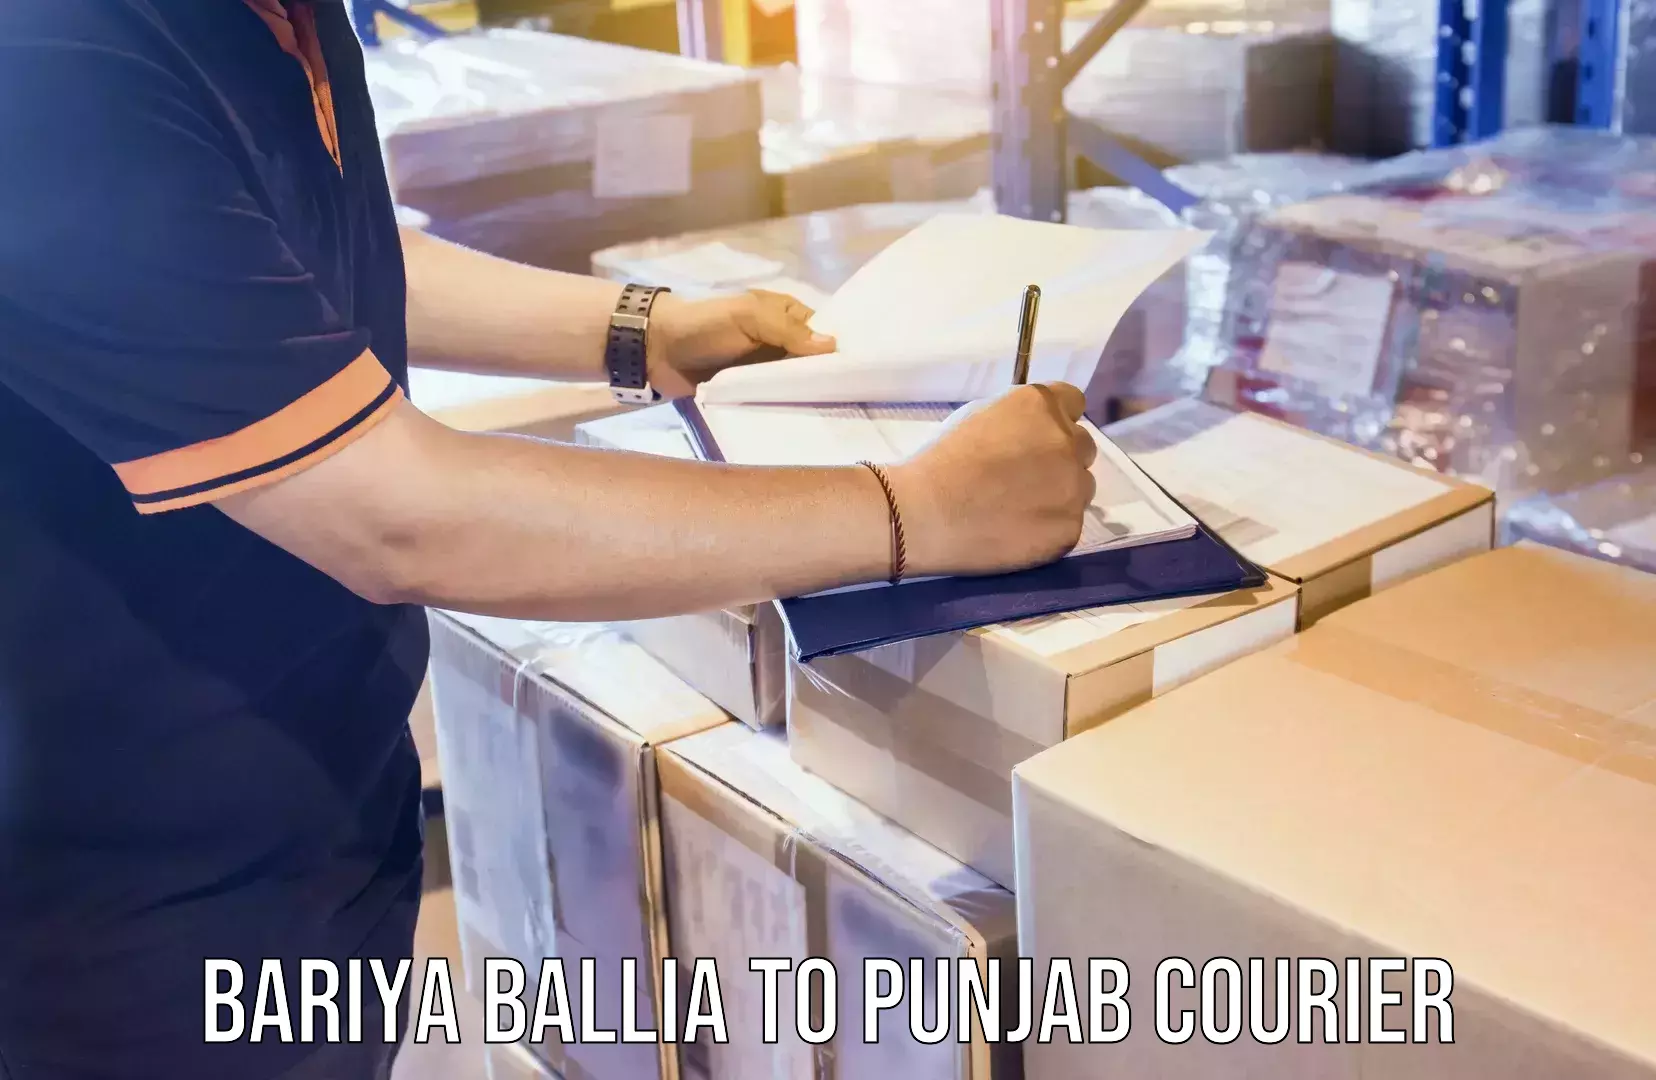 Express logistics service Bariya Ballia to Punjab